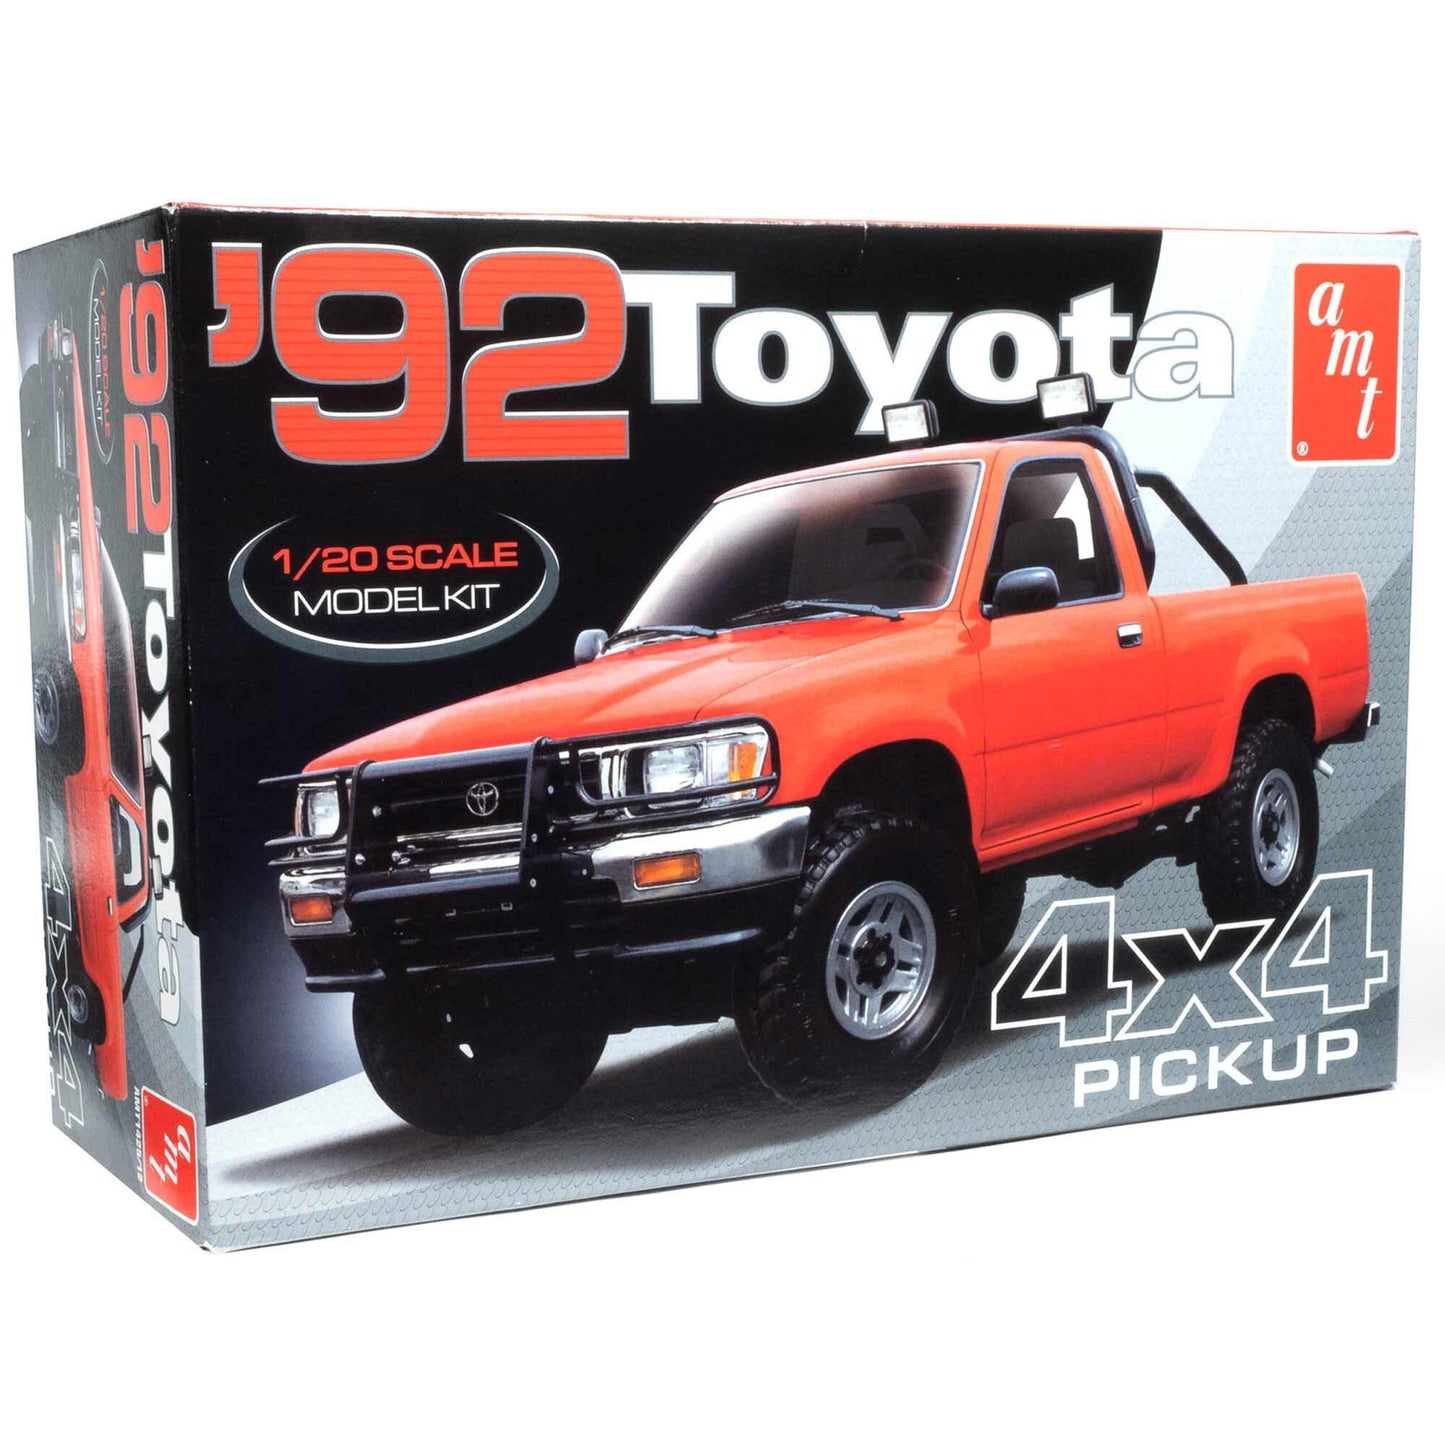 1992 Toyota 4x4 Pickup 1/20